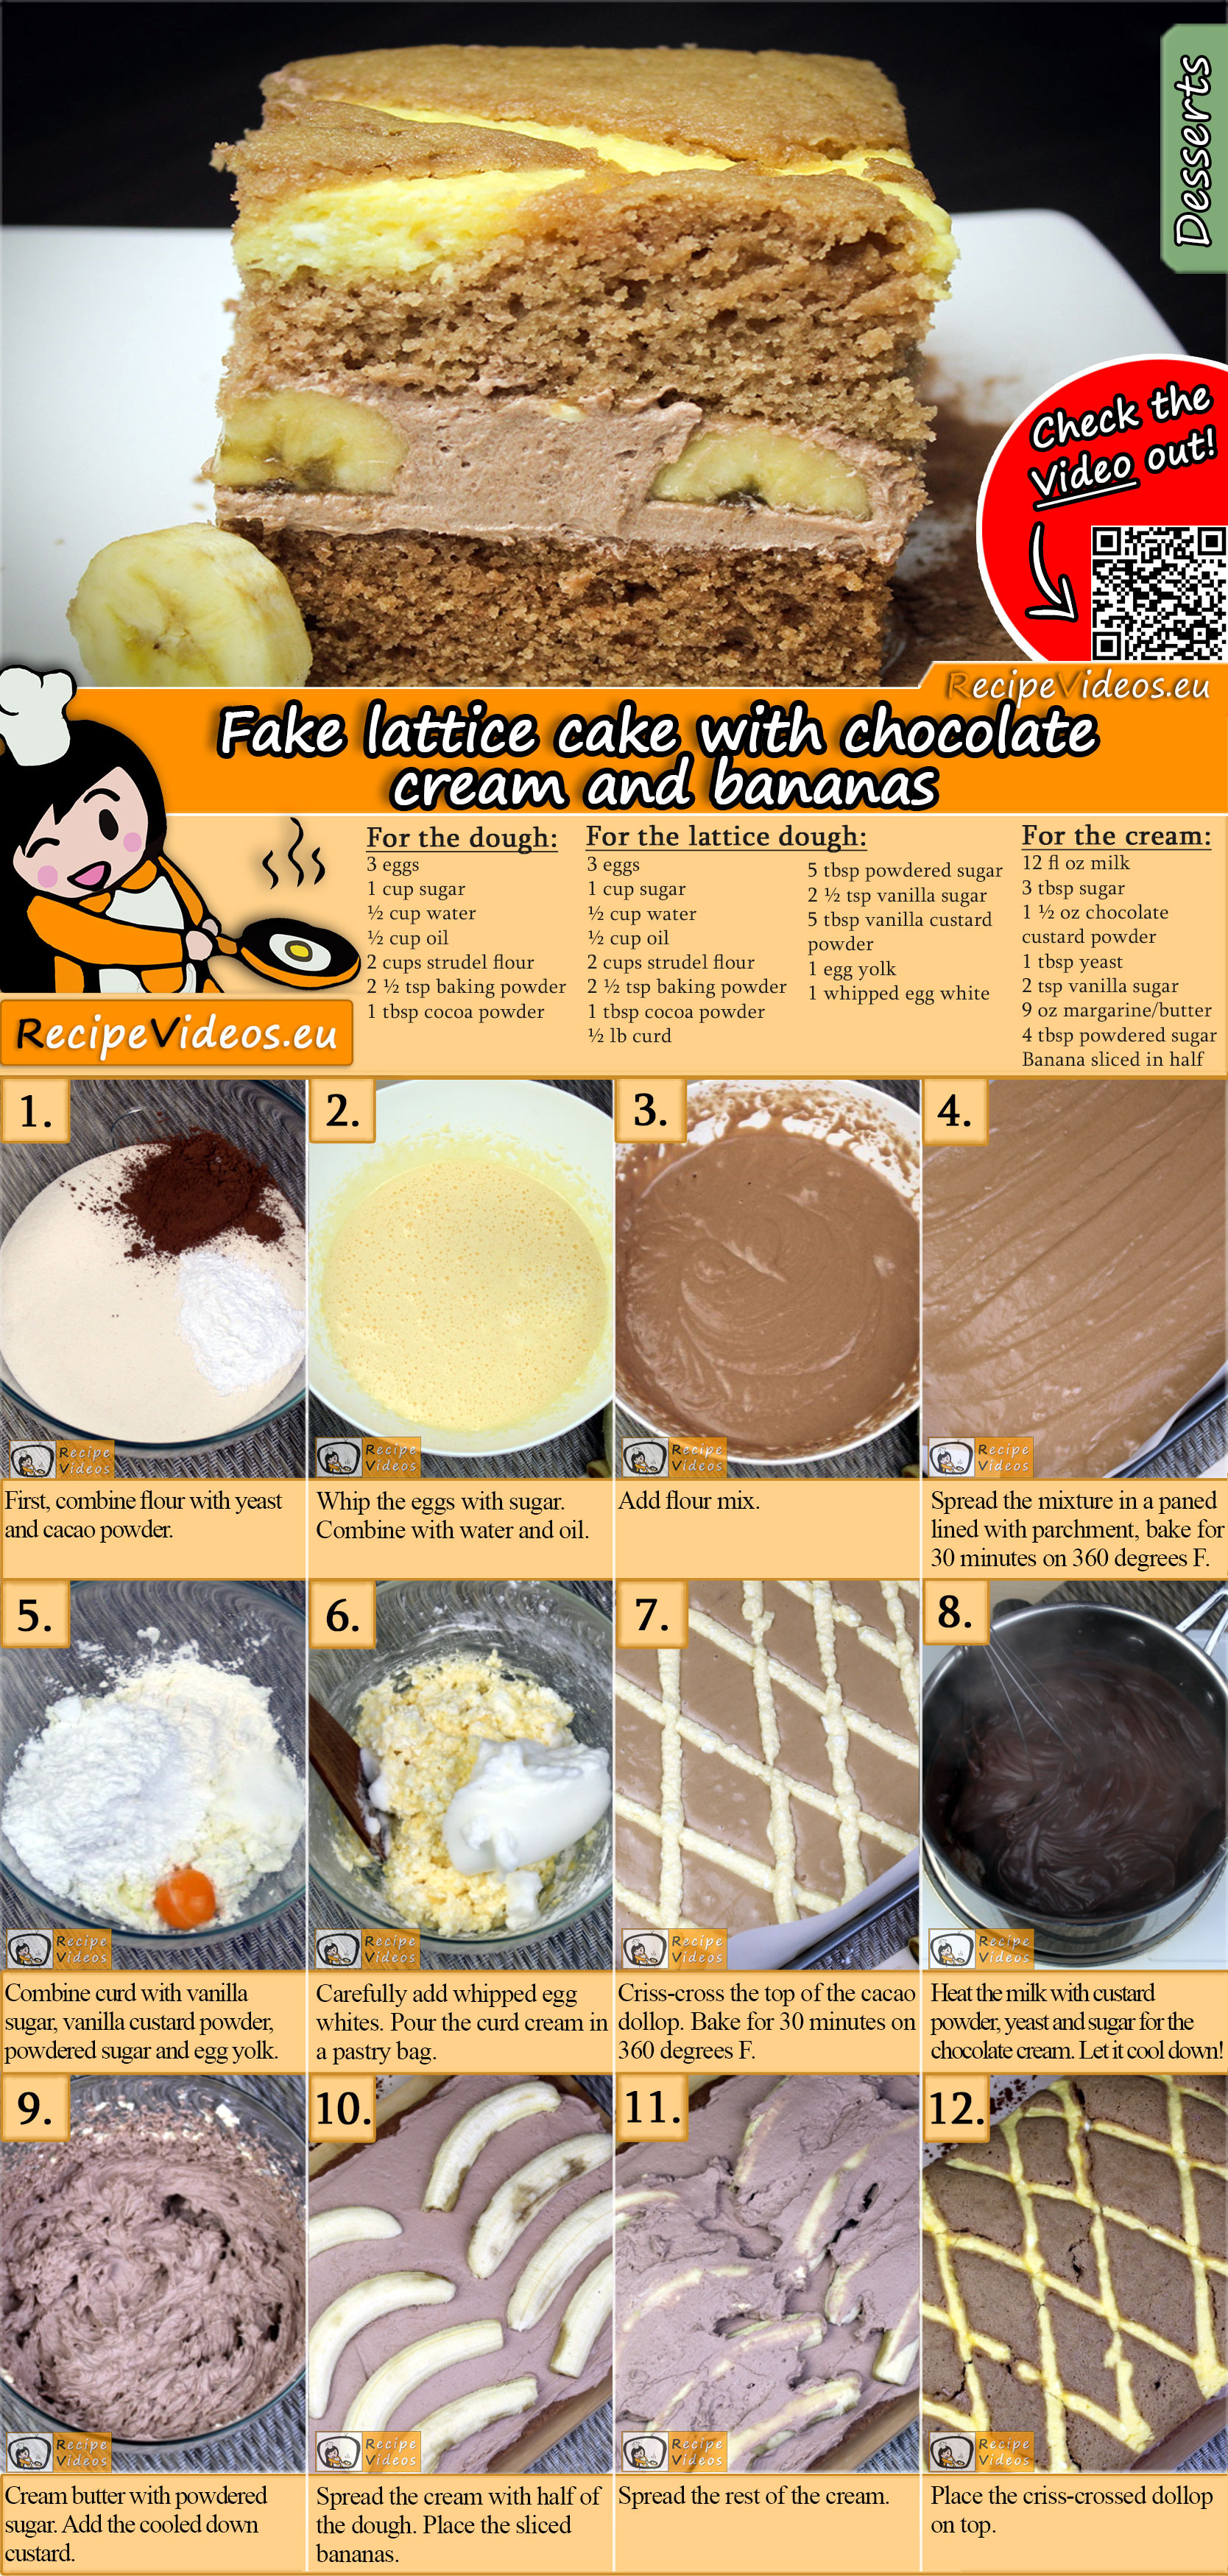 Fake lattice cake with chocolate cream and bananas recipe with video